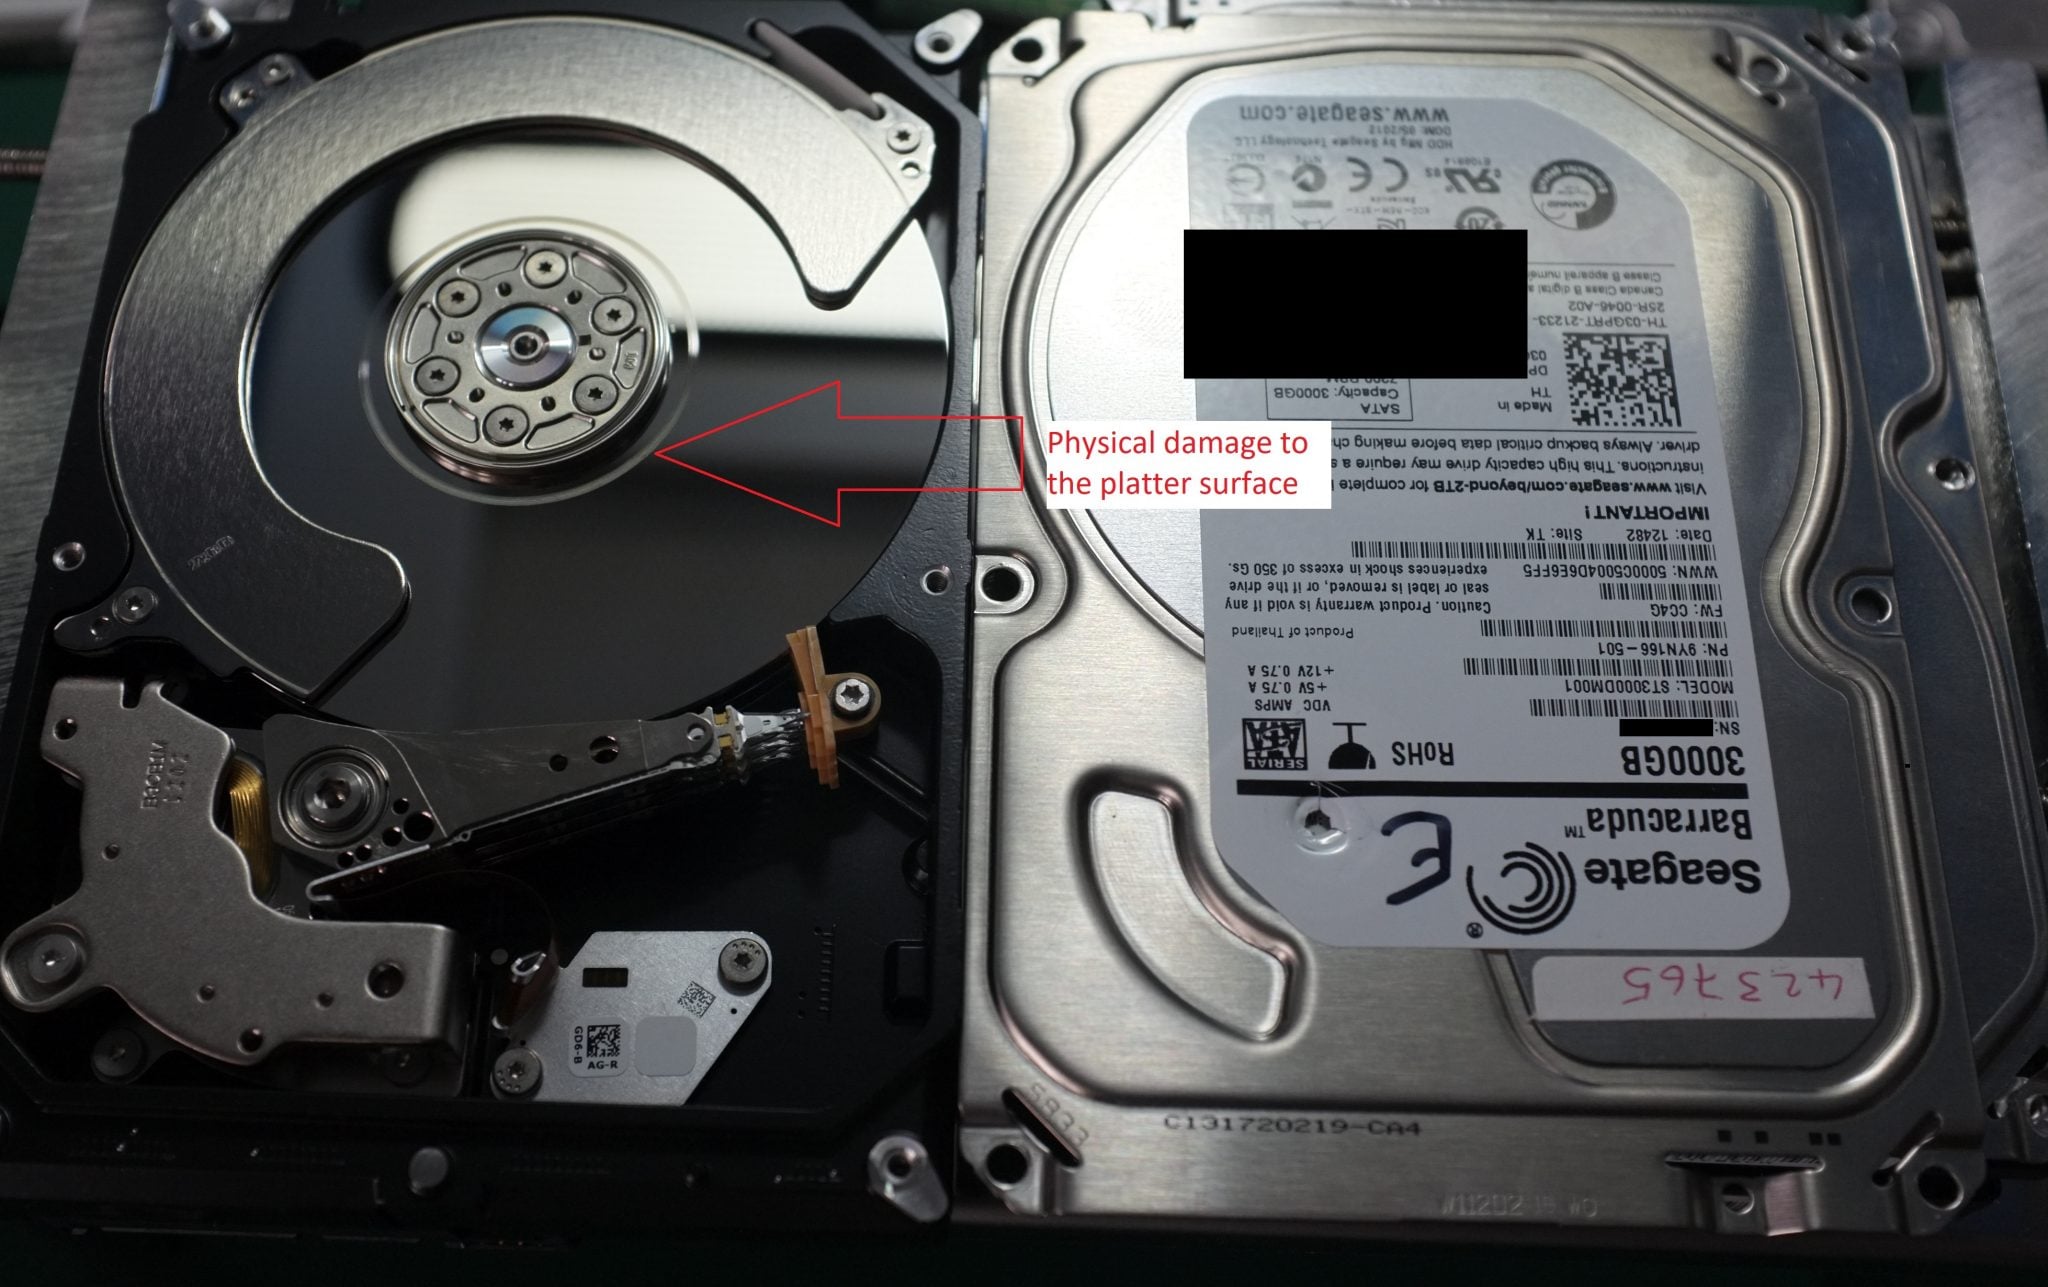 Seagate 3TB HDD Platter damage